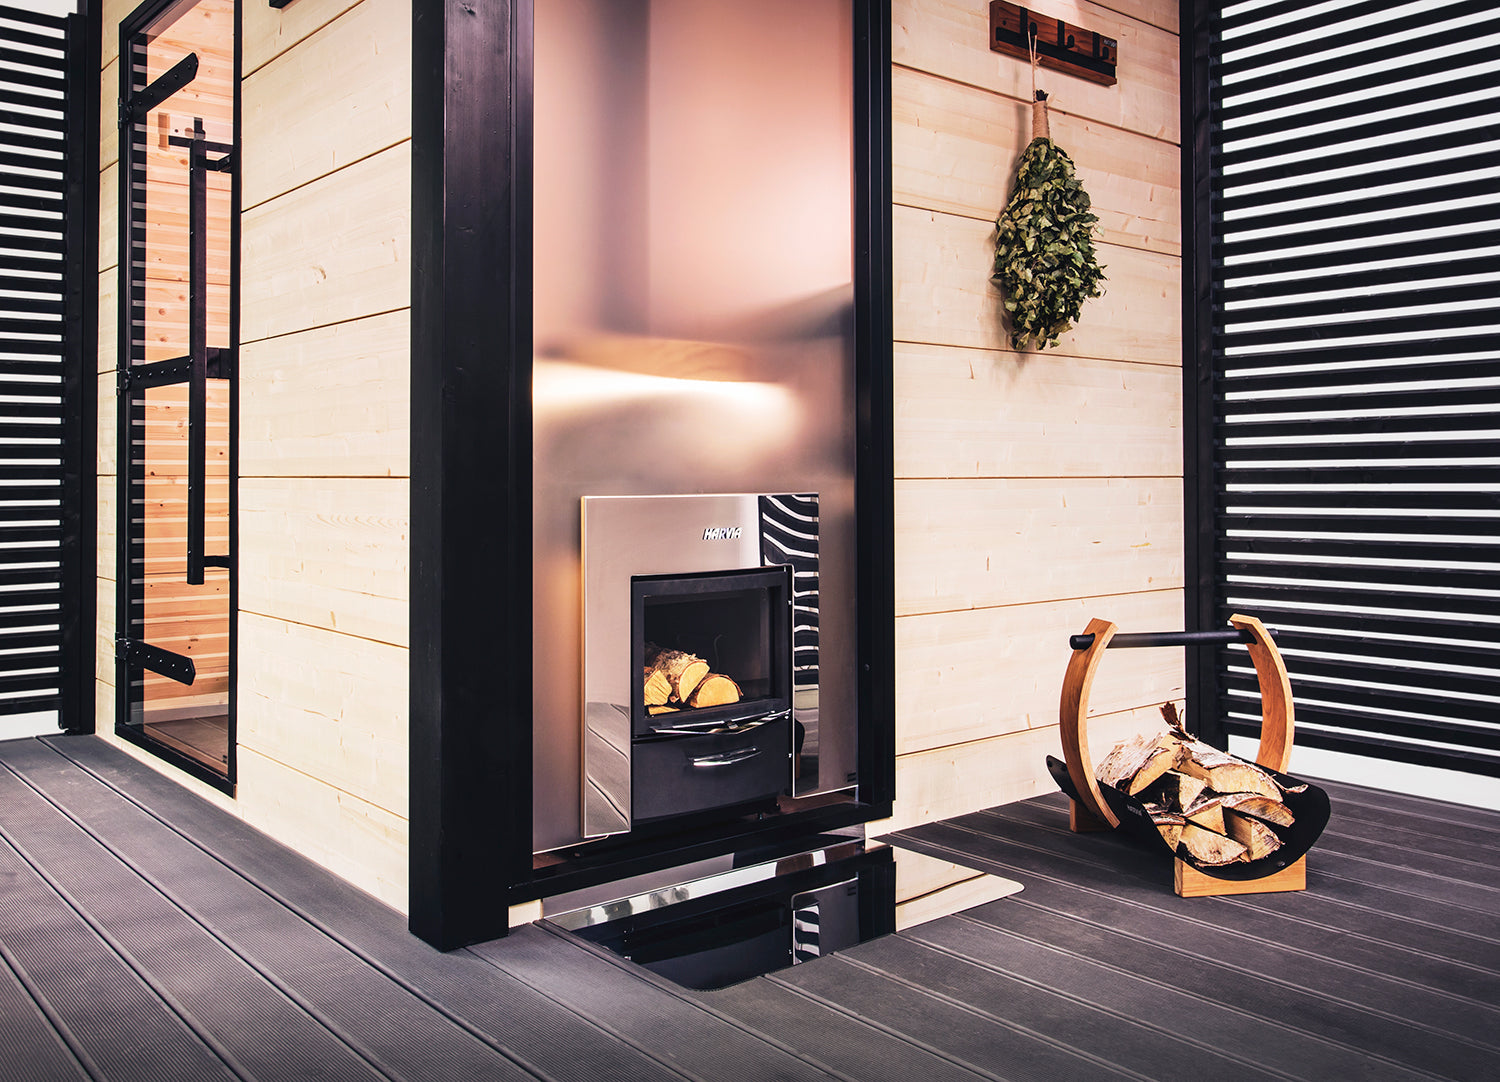 Harvia Legend 240 Duo 21kW Wood-Burning Sauna Stove/ Fireplace Combo